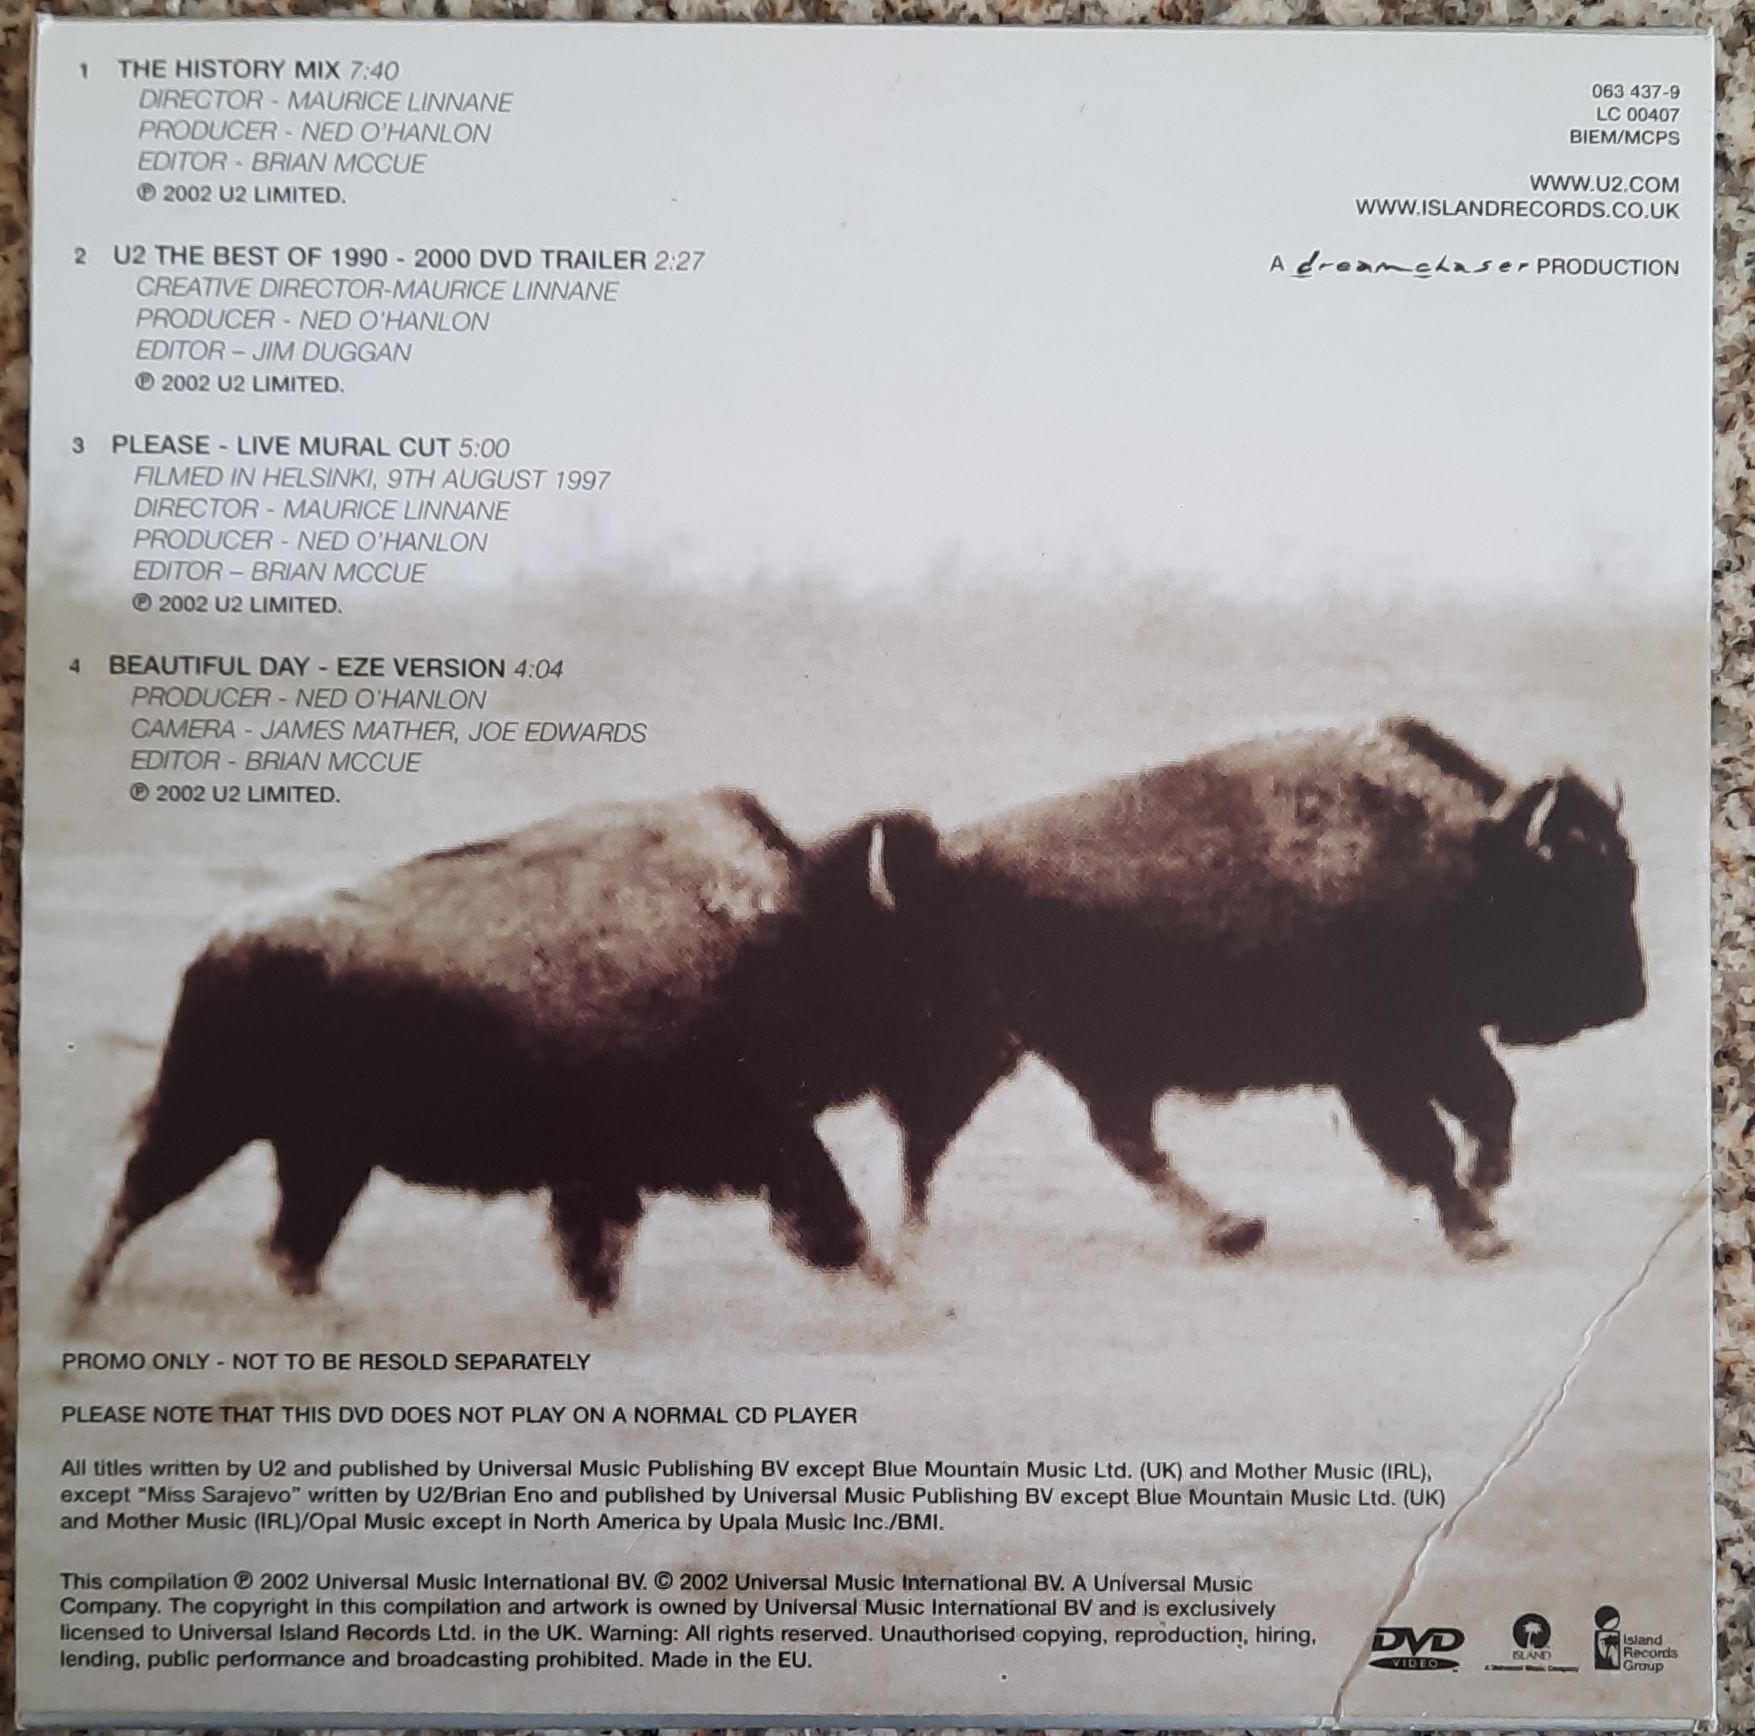 CD "U2: the best of 90-00"